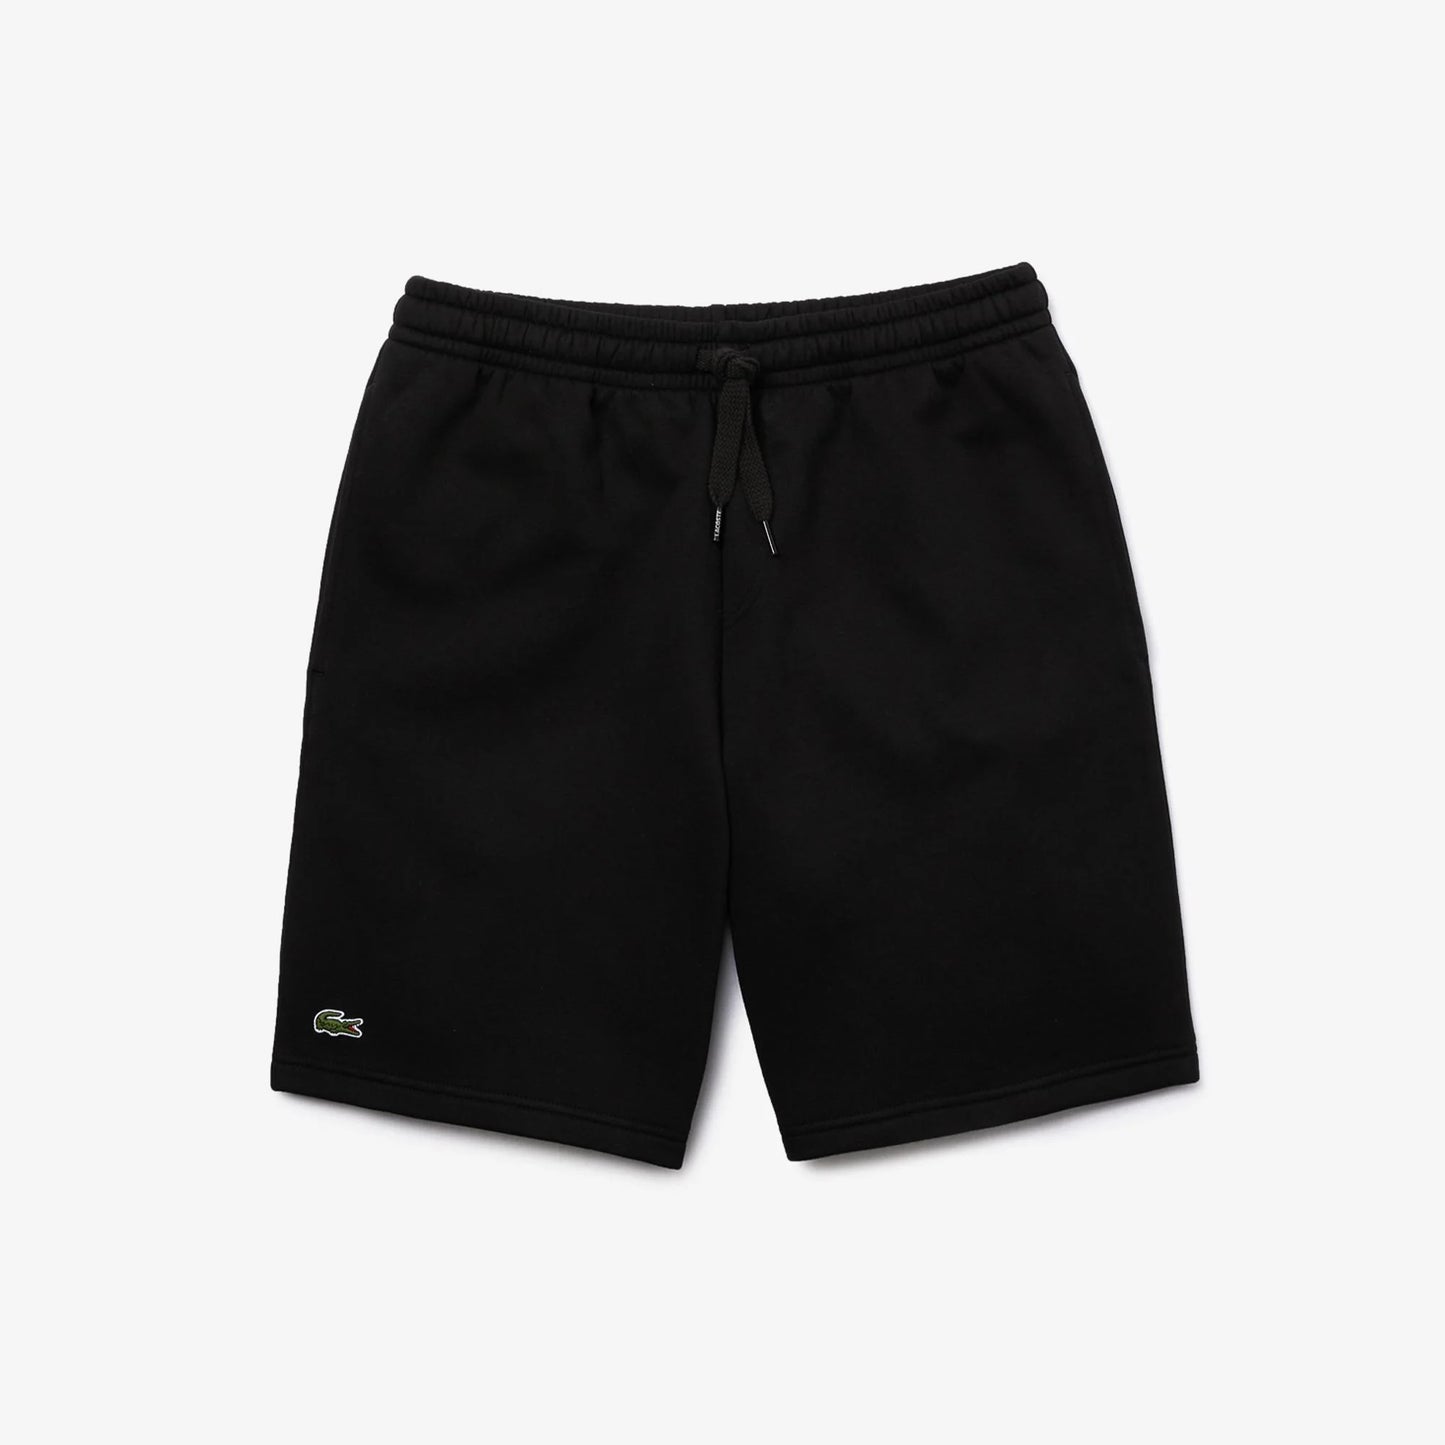 Men's Lacoste SPORT Tennis Fleece Shorts - GH2136